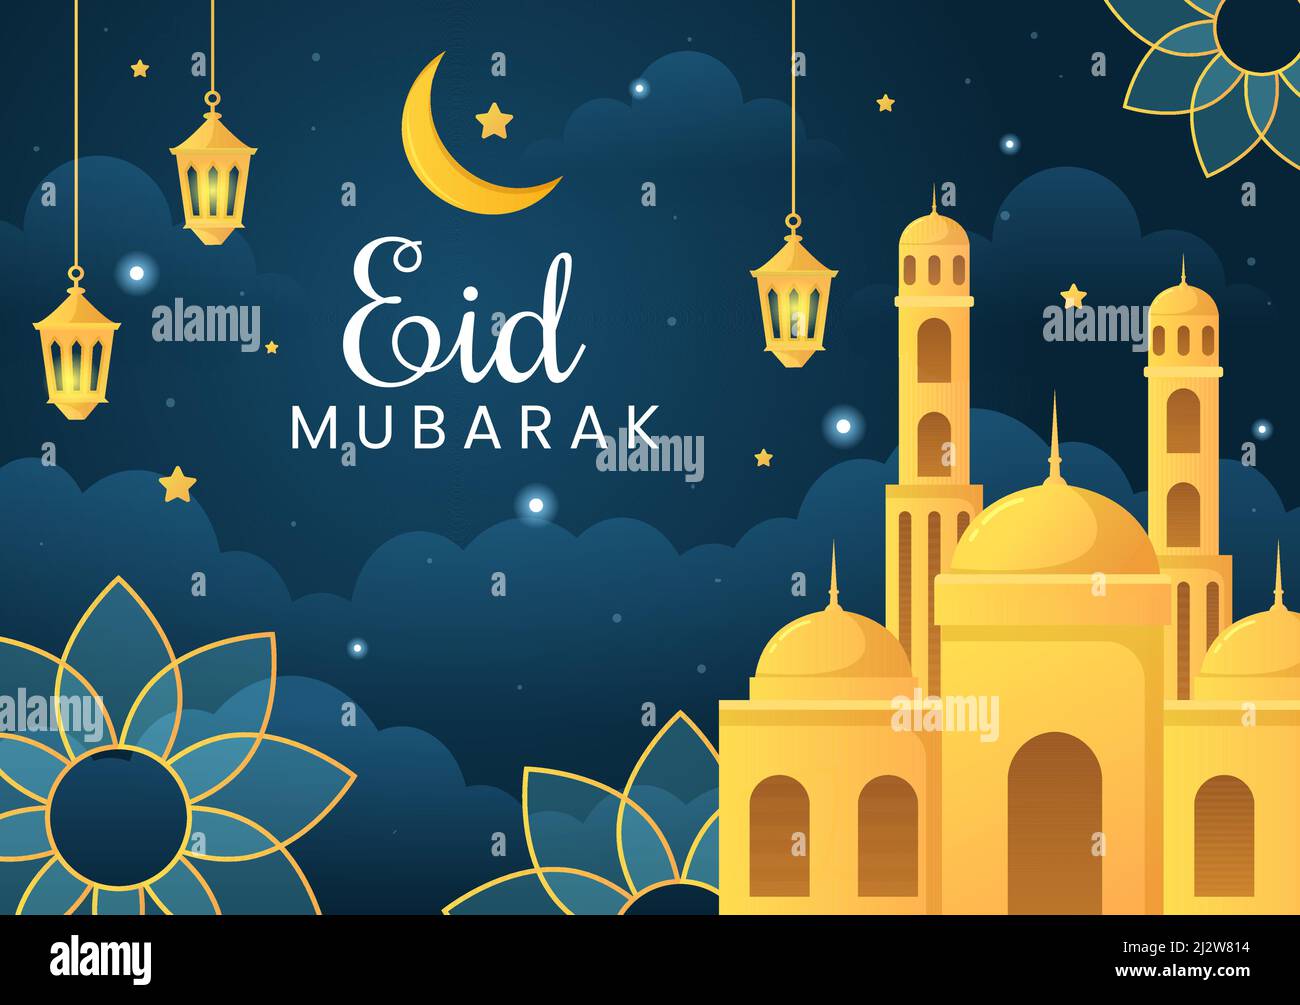 Happy Eid ulFitr Mubarak Background Illustration with Pictures of